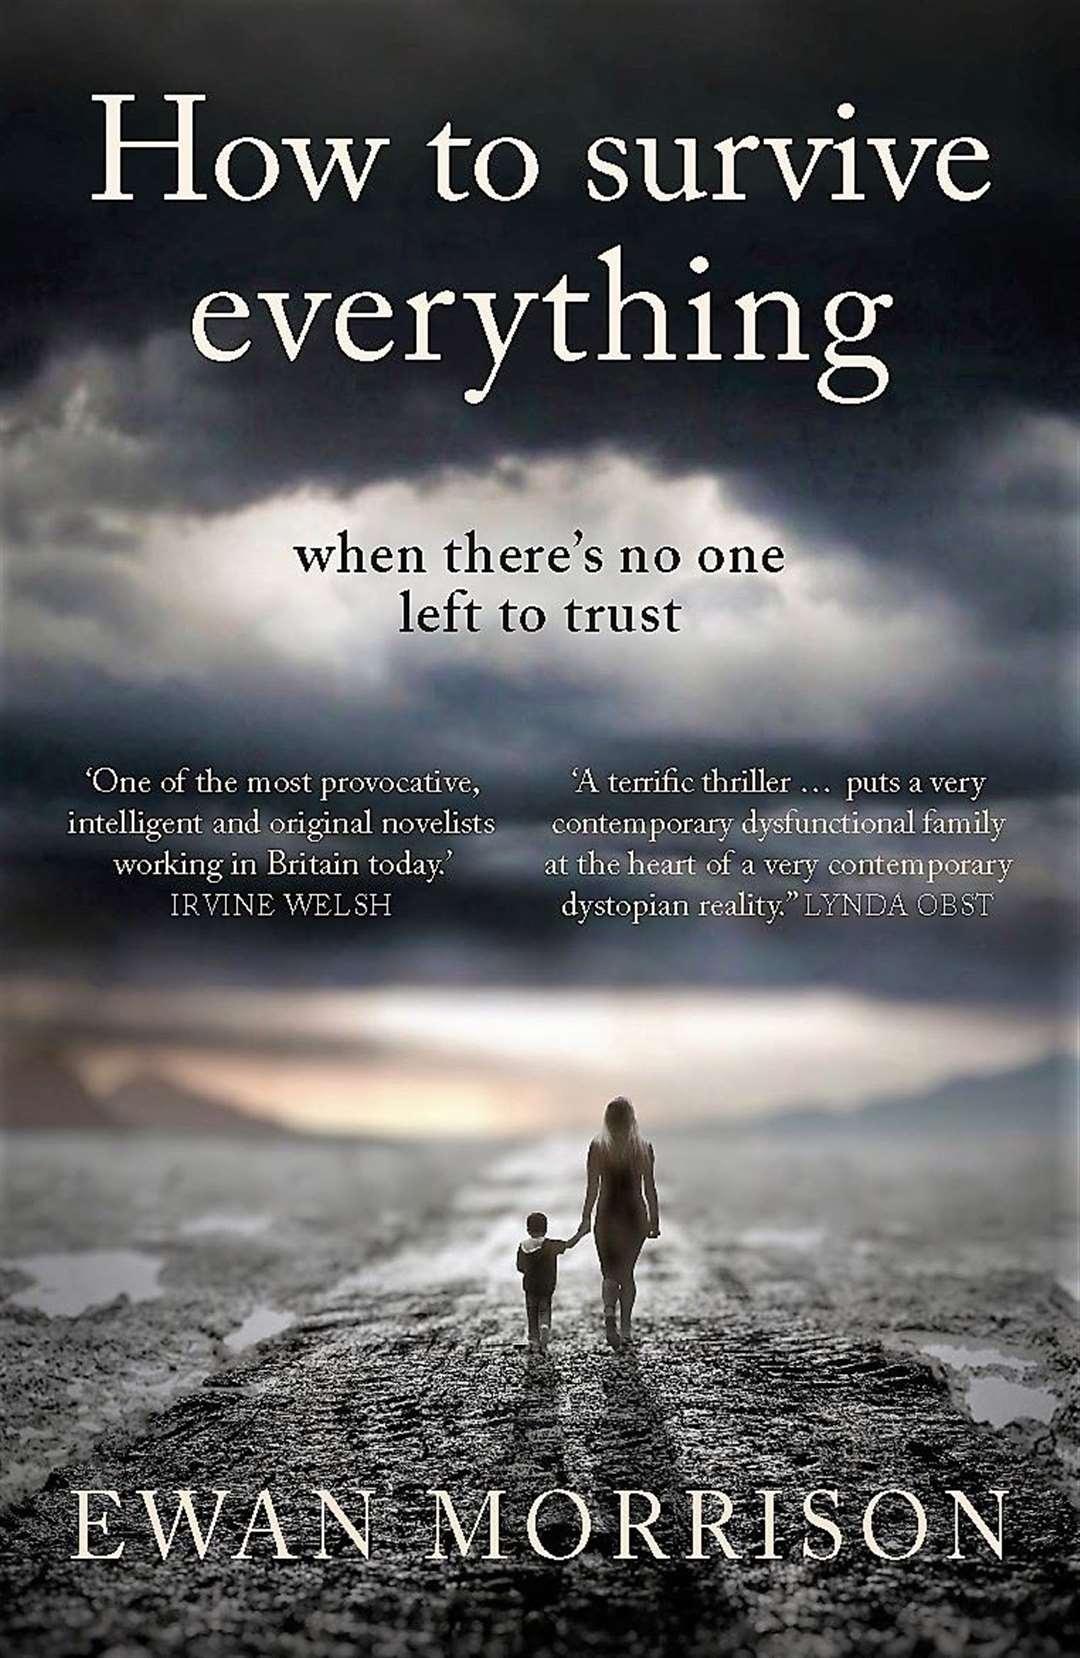 The cover of Ewan Morrison's latest book.